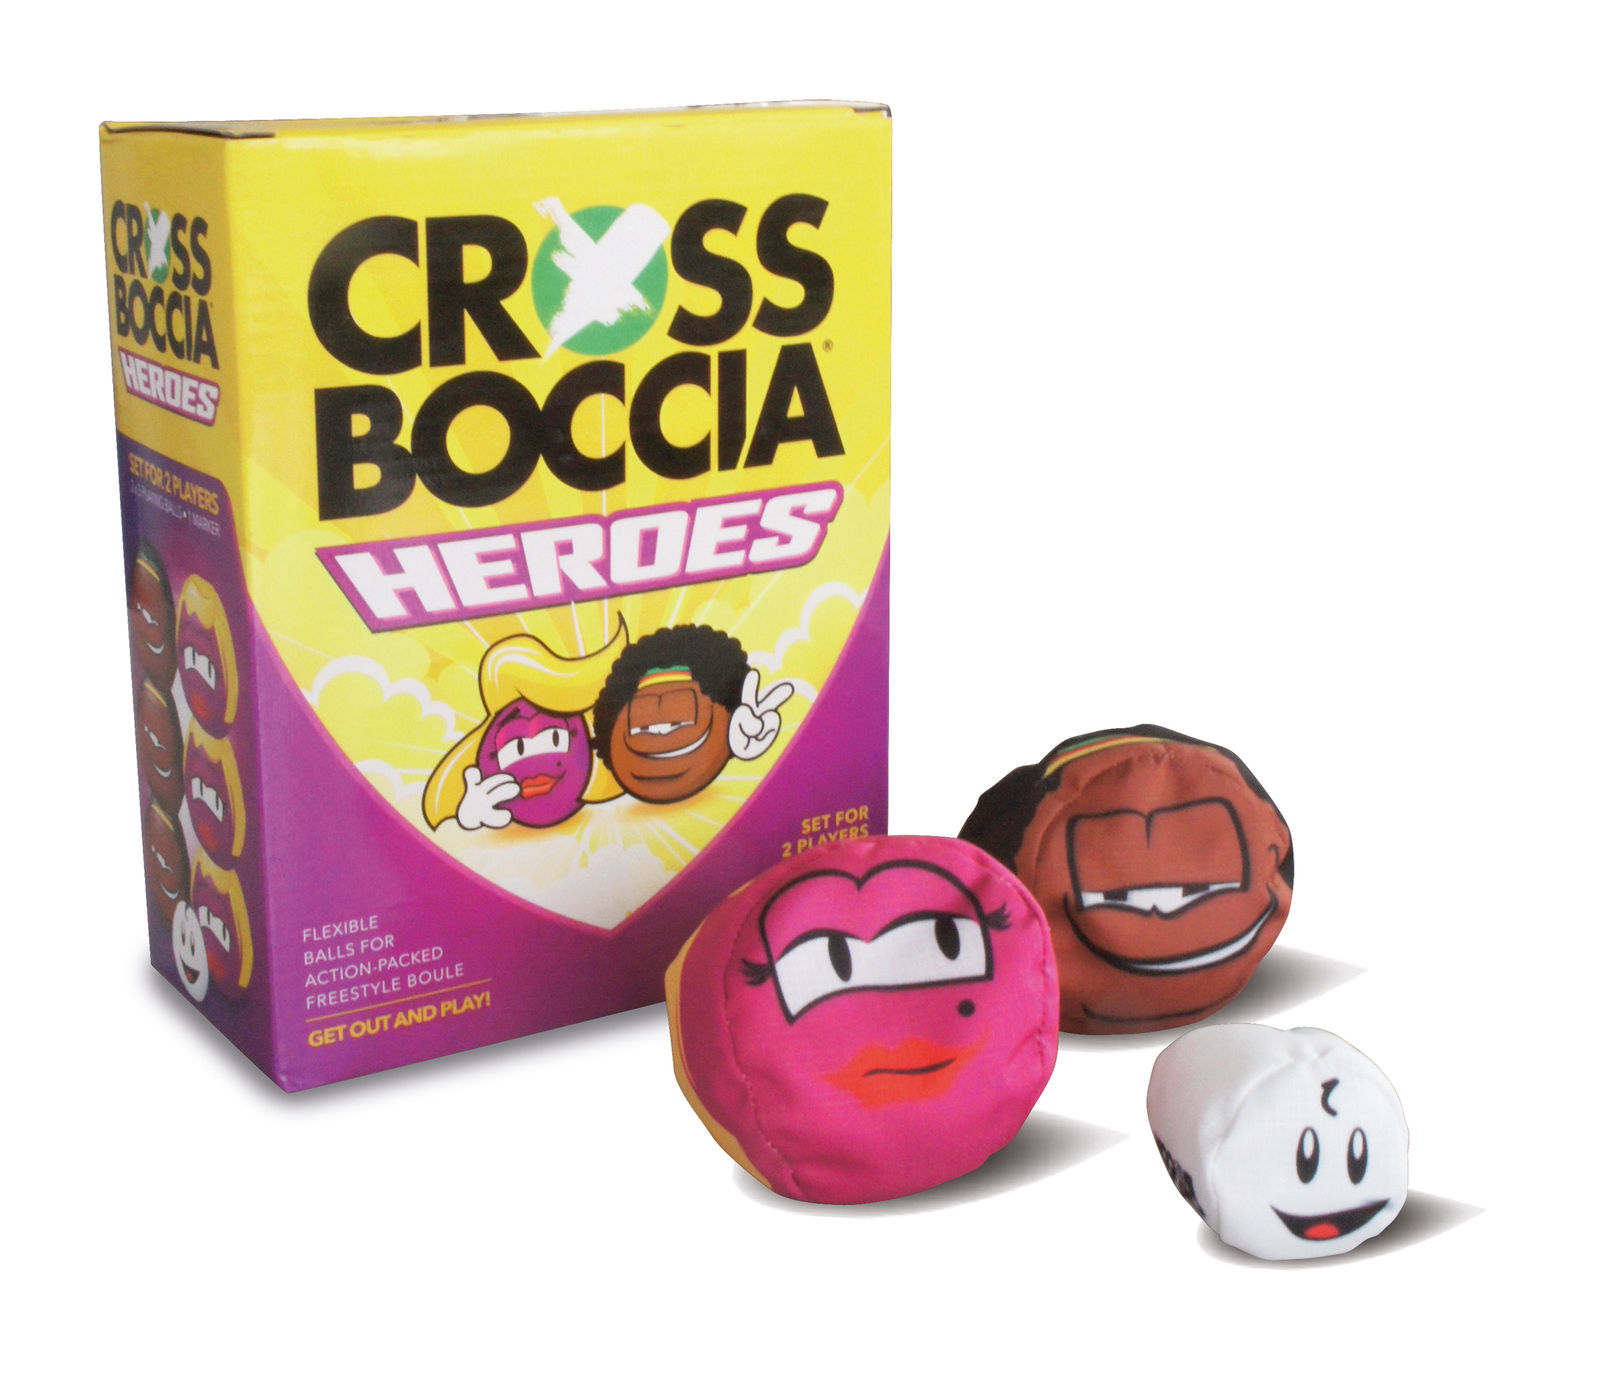 Crossboccia Double-Pack Heroes, Design "Blond+Muffin" Art. 970827